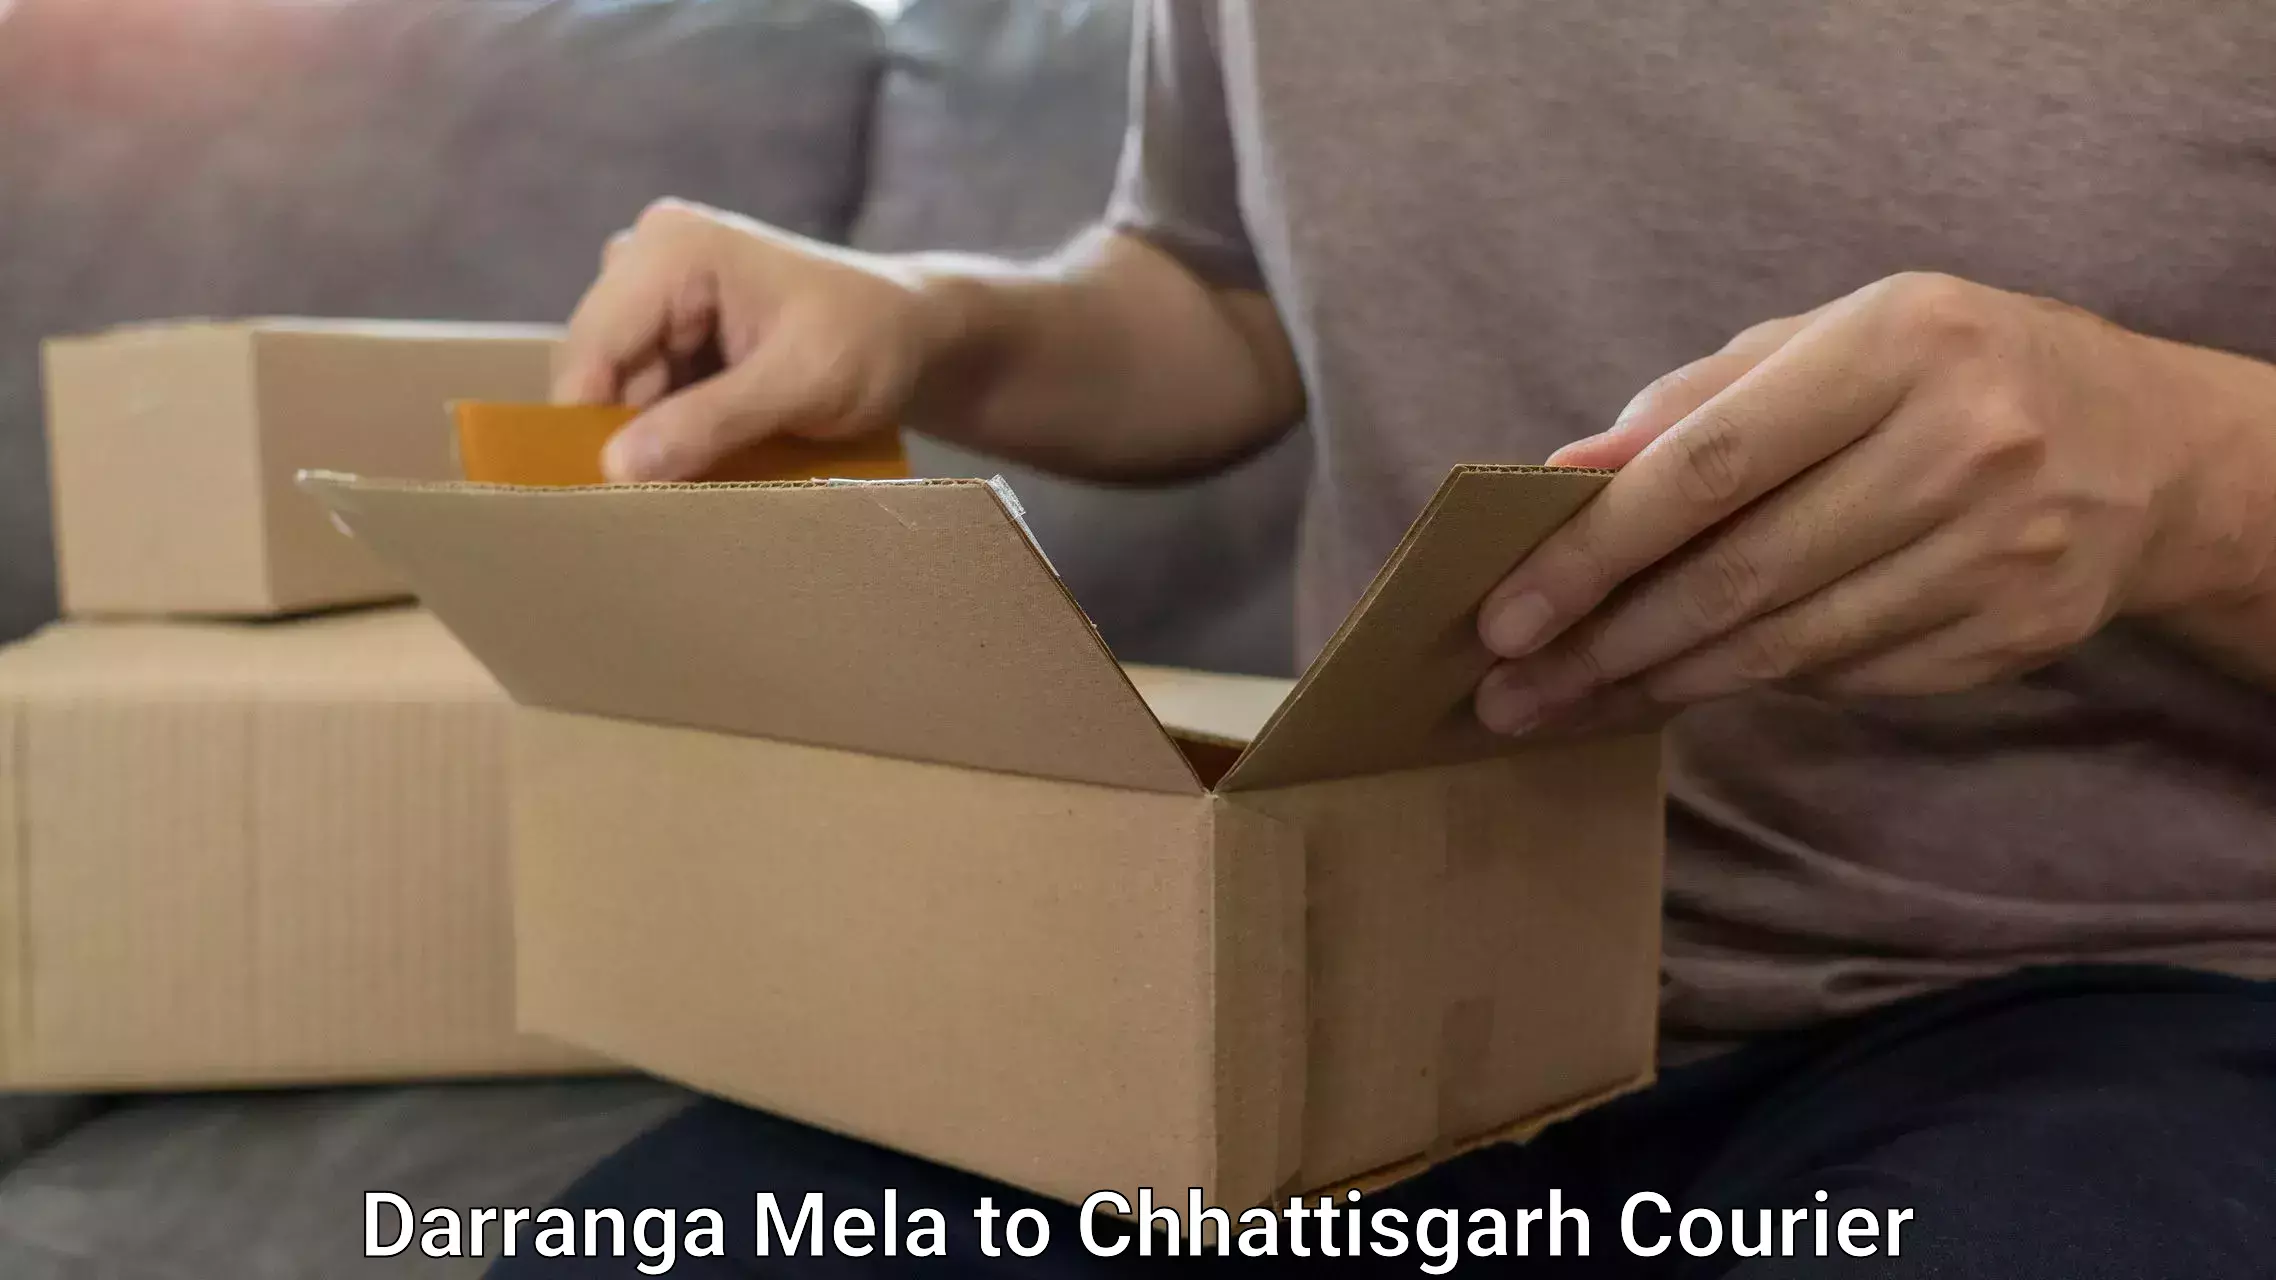 Baggage relocation service Darranga Mela to Chhattisgarh